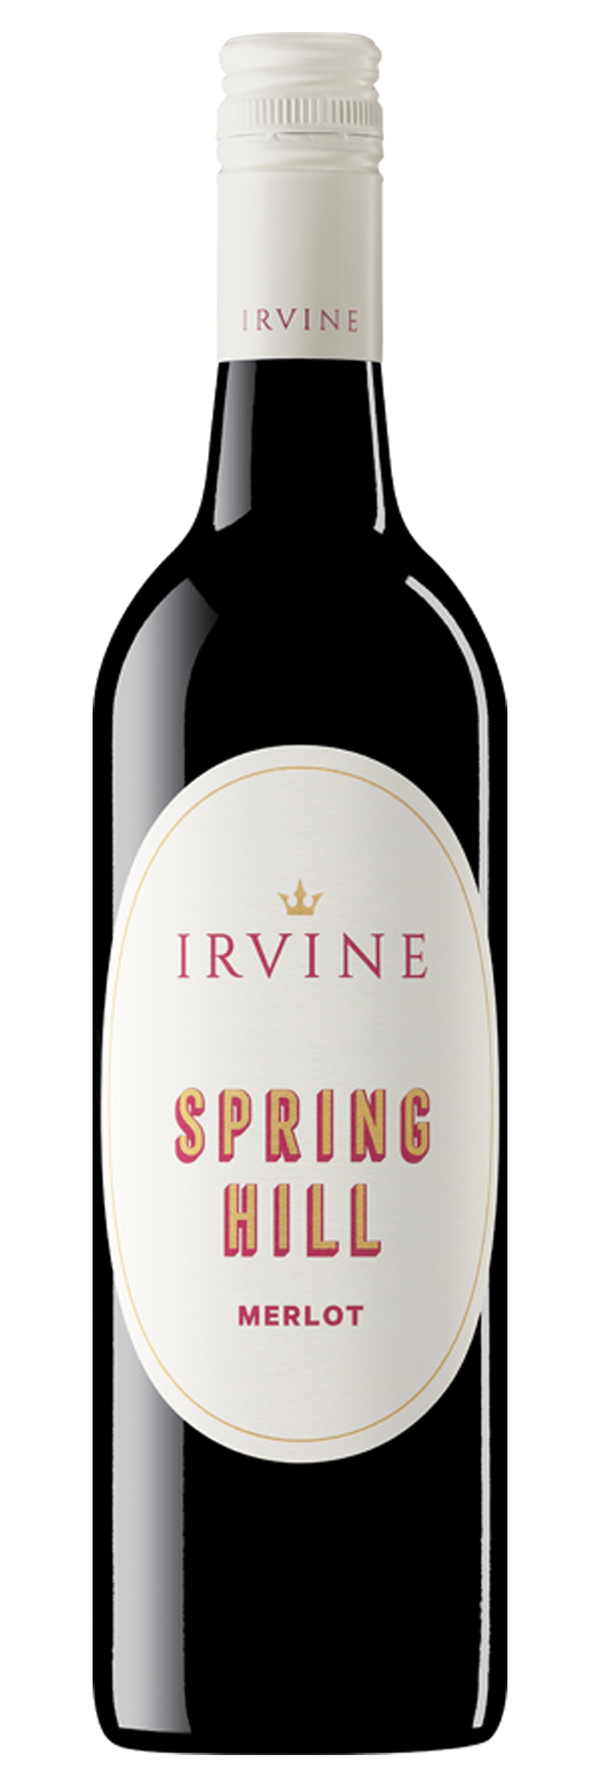 Irvine Springhill Merlot 2018 - Wines of NZ